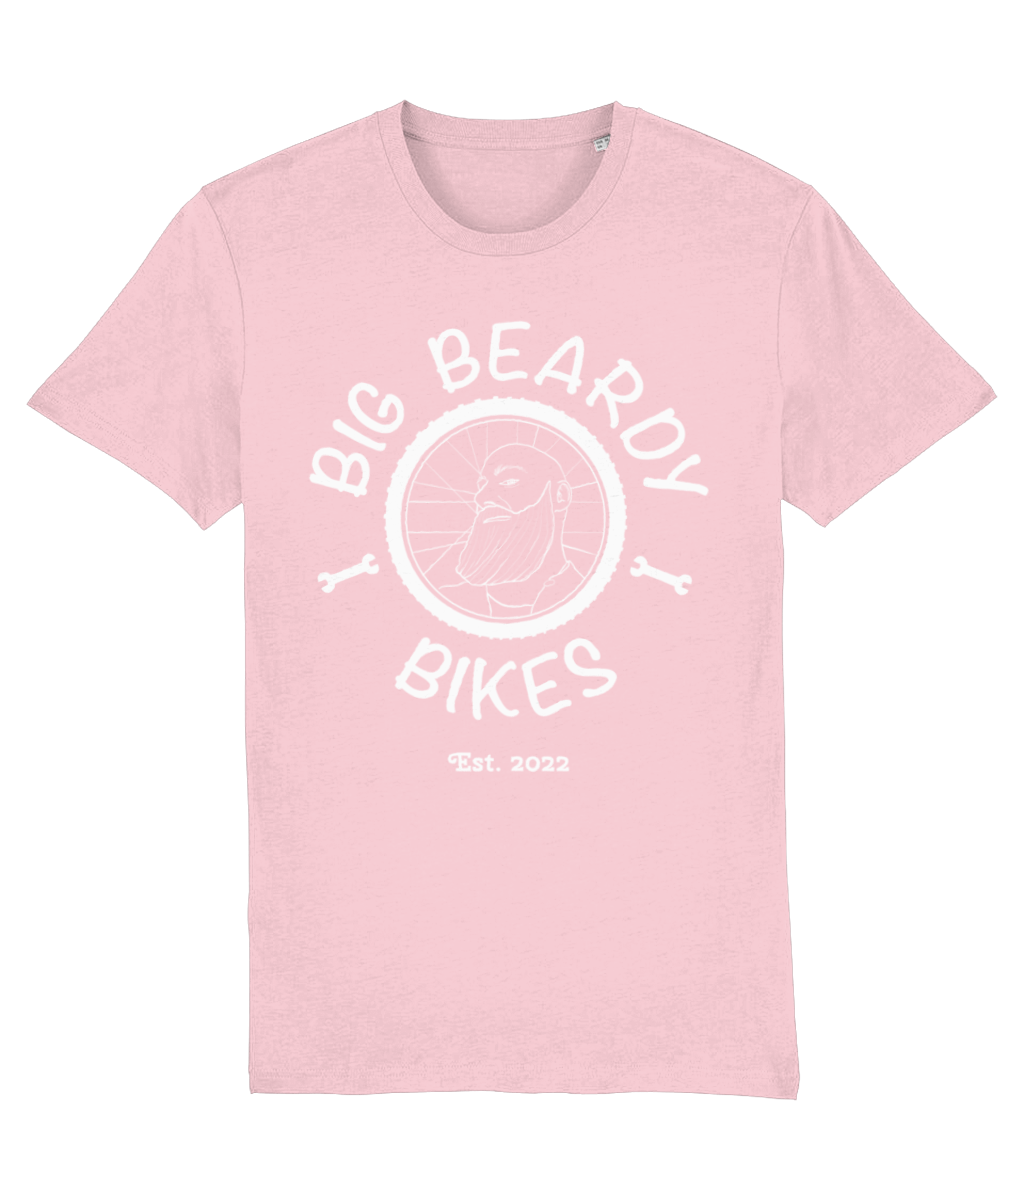 Big beardy bikes tee shirt cotton pink white logo